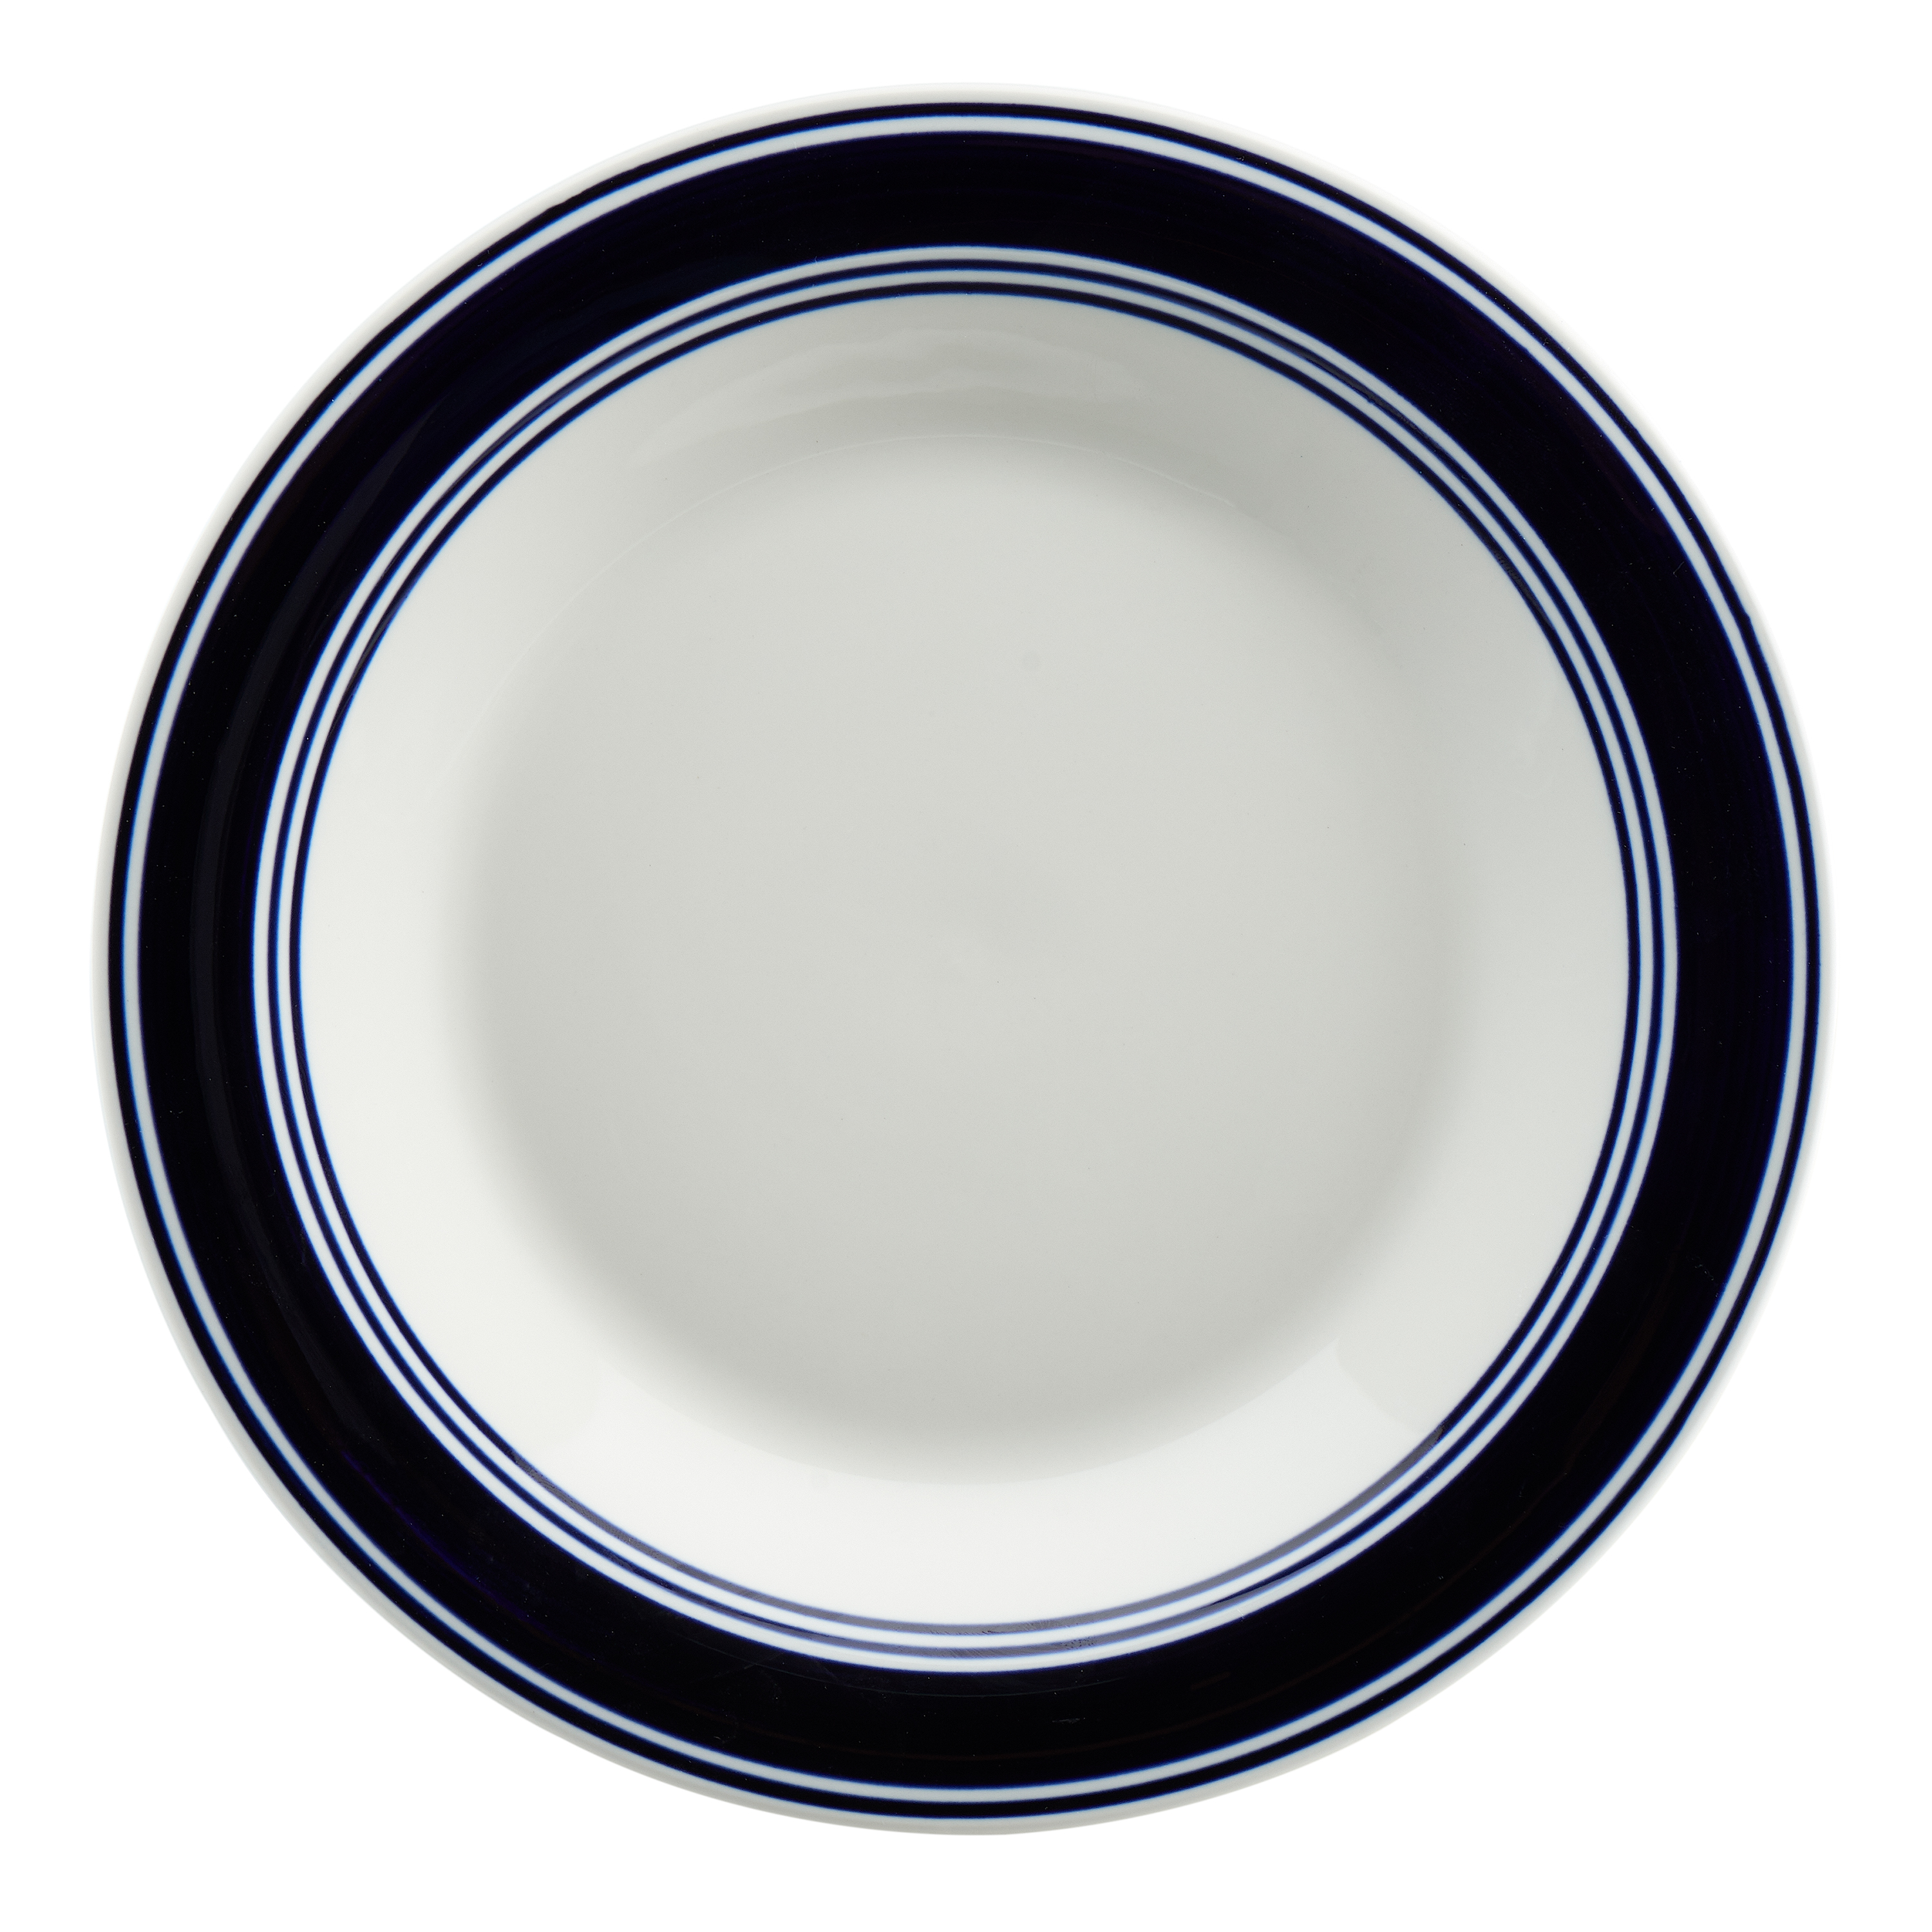 Mainstays Blue Banded 12-Piece Stoneware Dinnerware Set - image 5 of 6